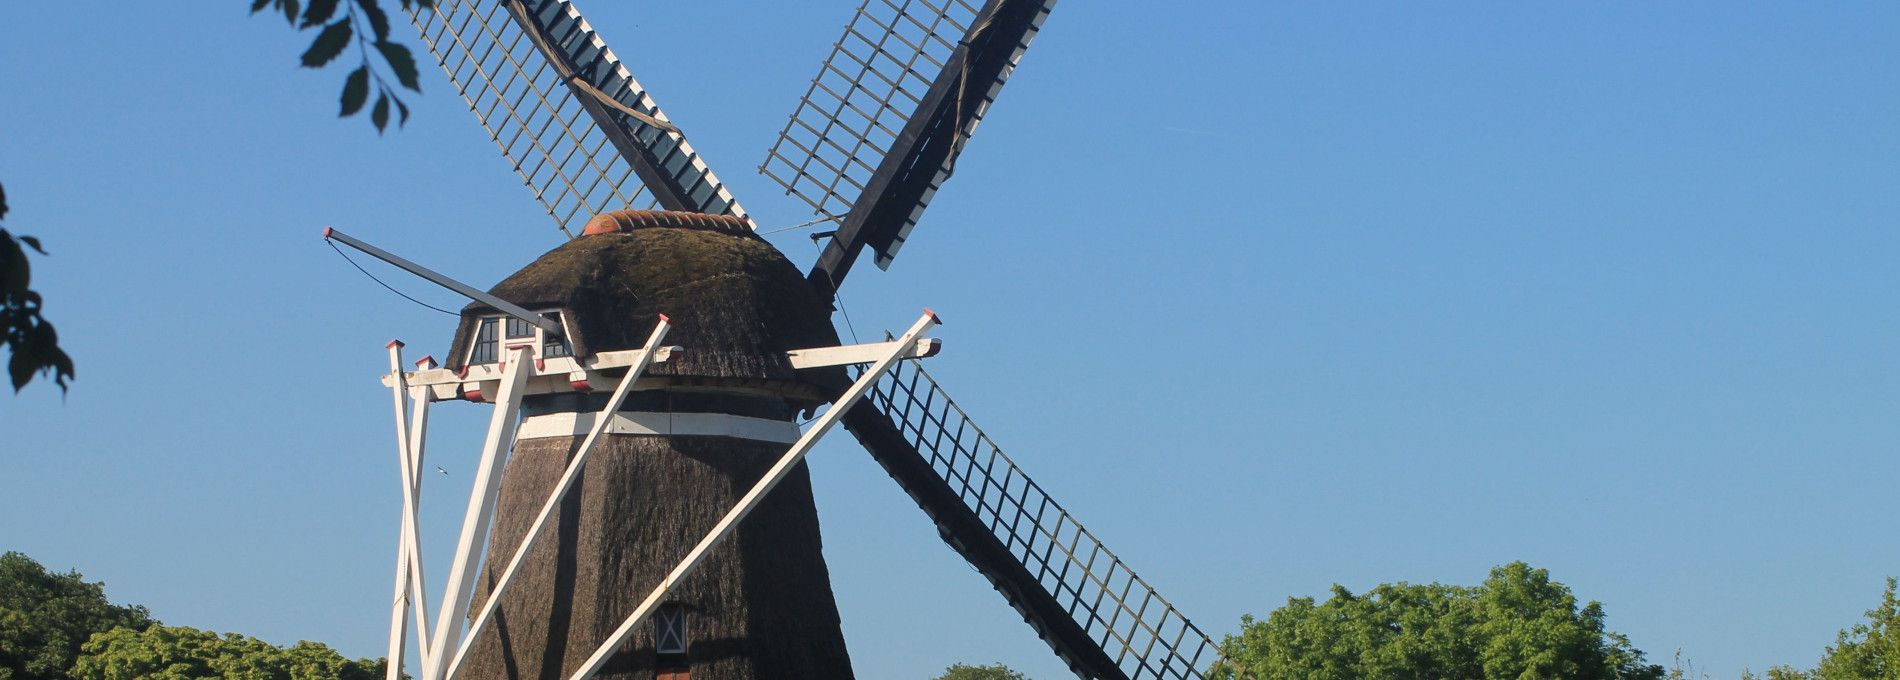 Corn mill De Phenix -Tourist Information “VVV” Ameland